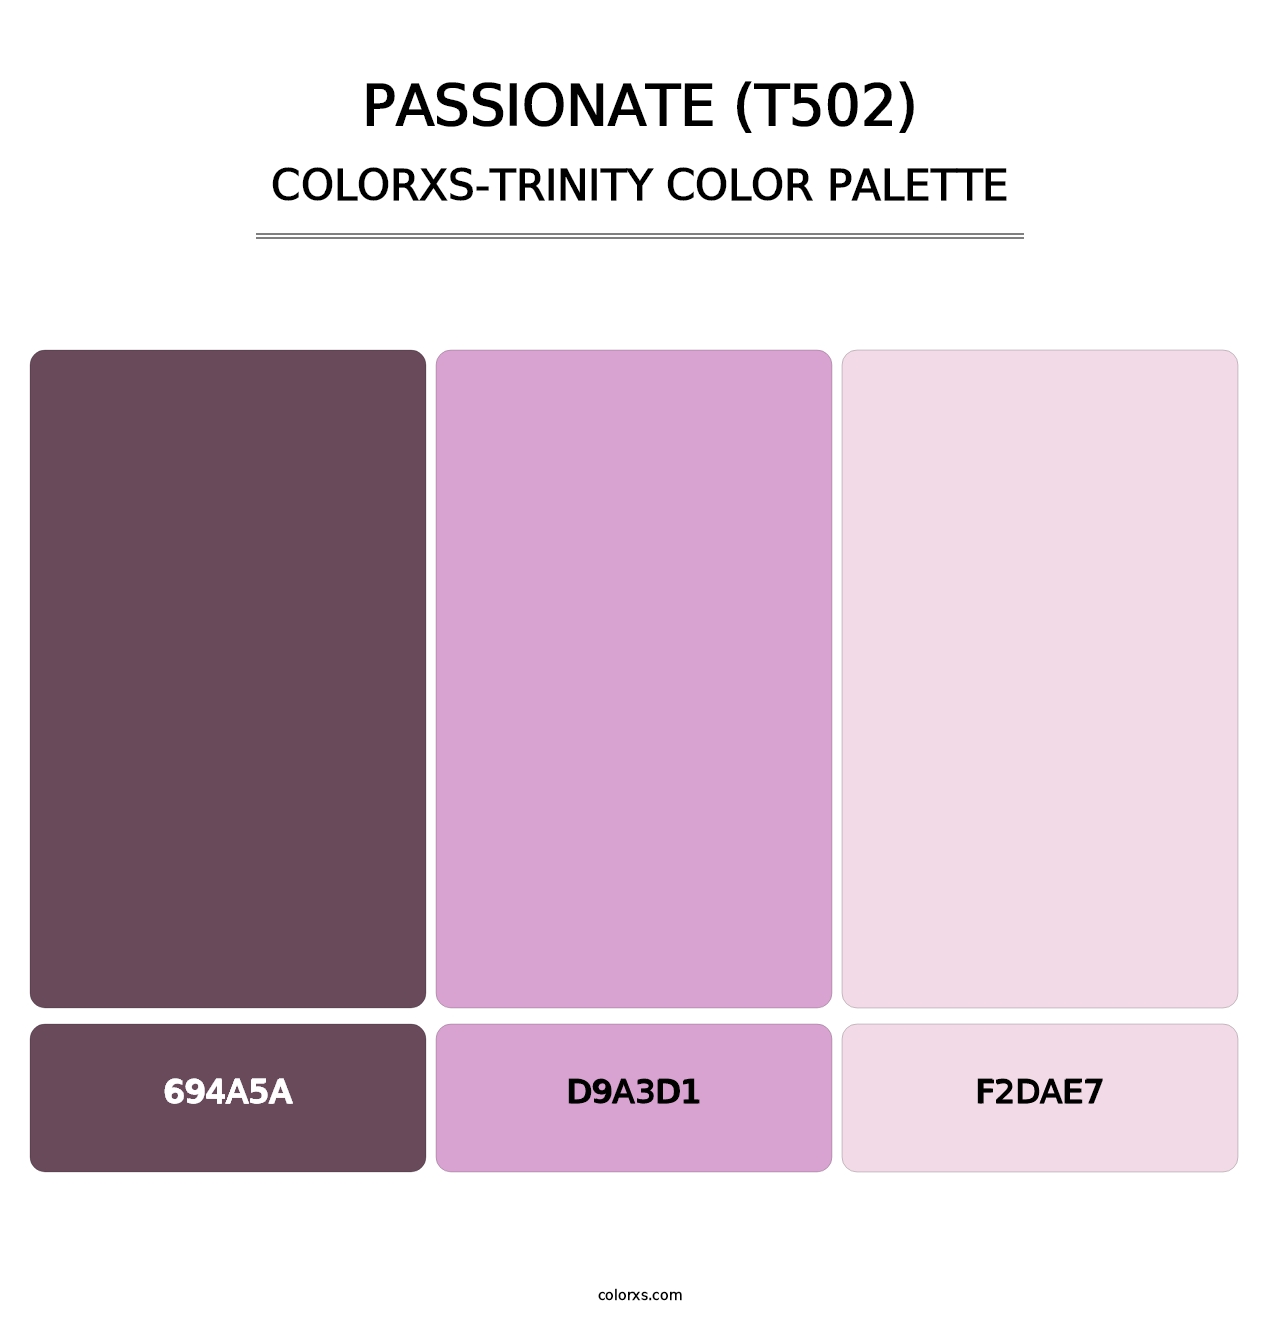 Passionate (T502) - Colorxs Trinity Palette